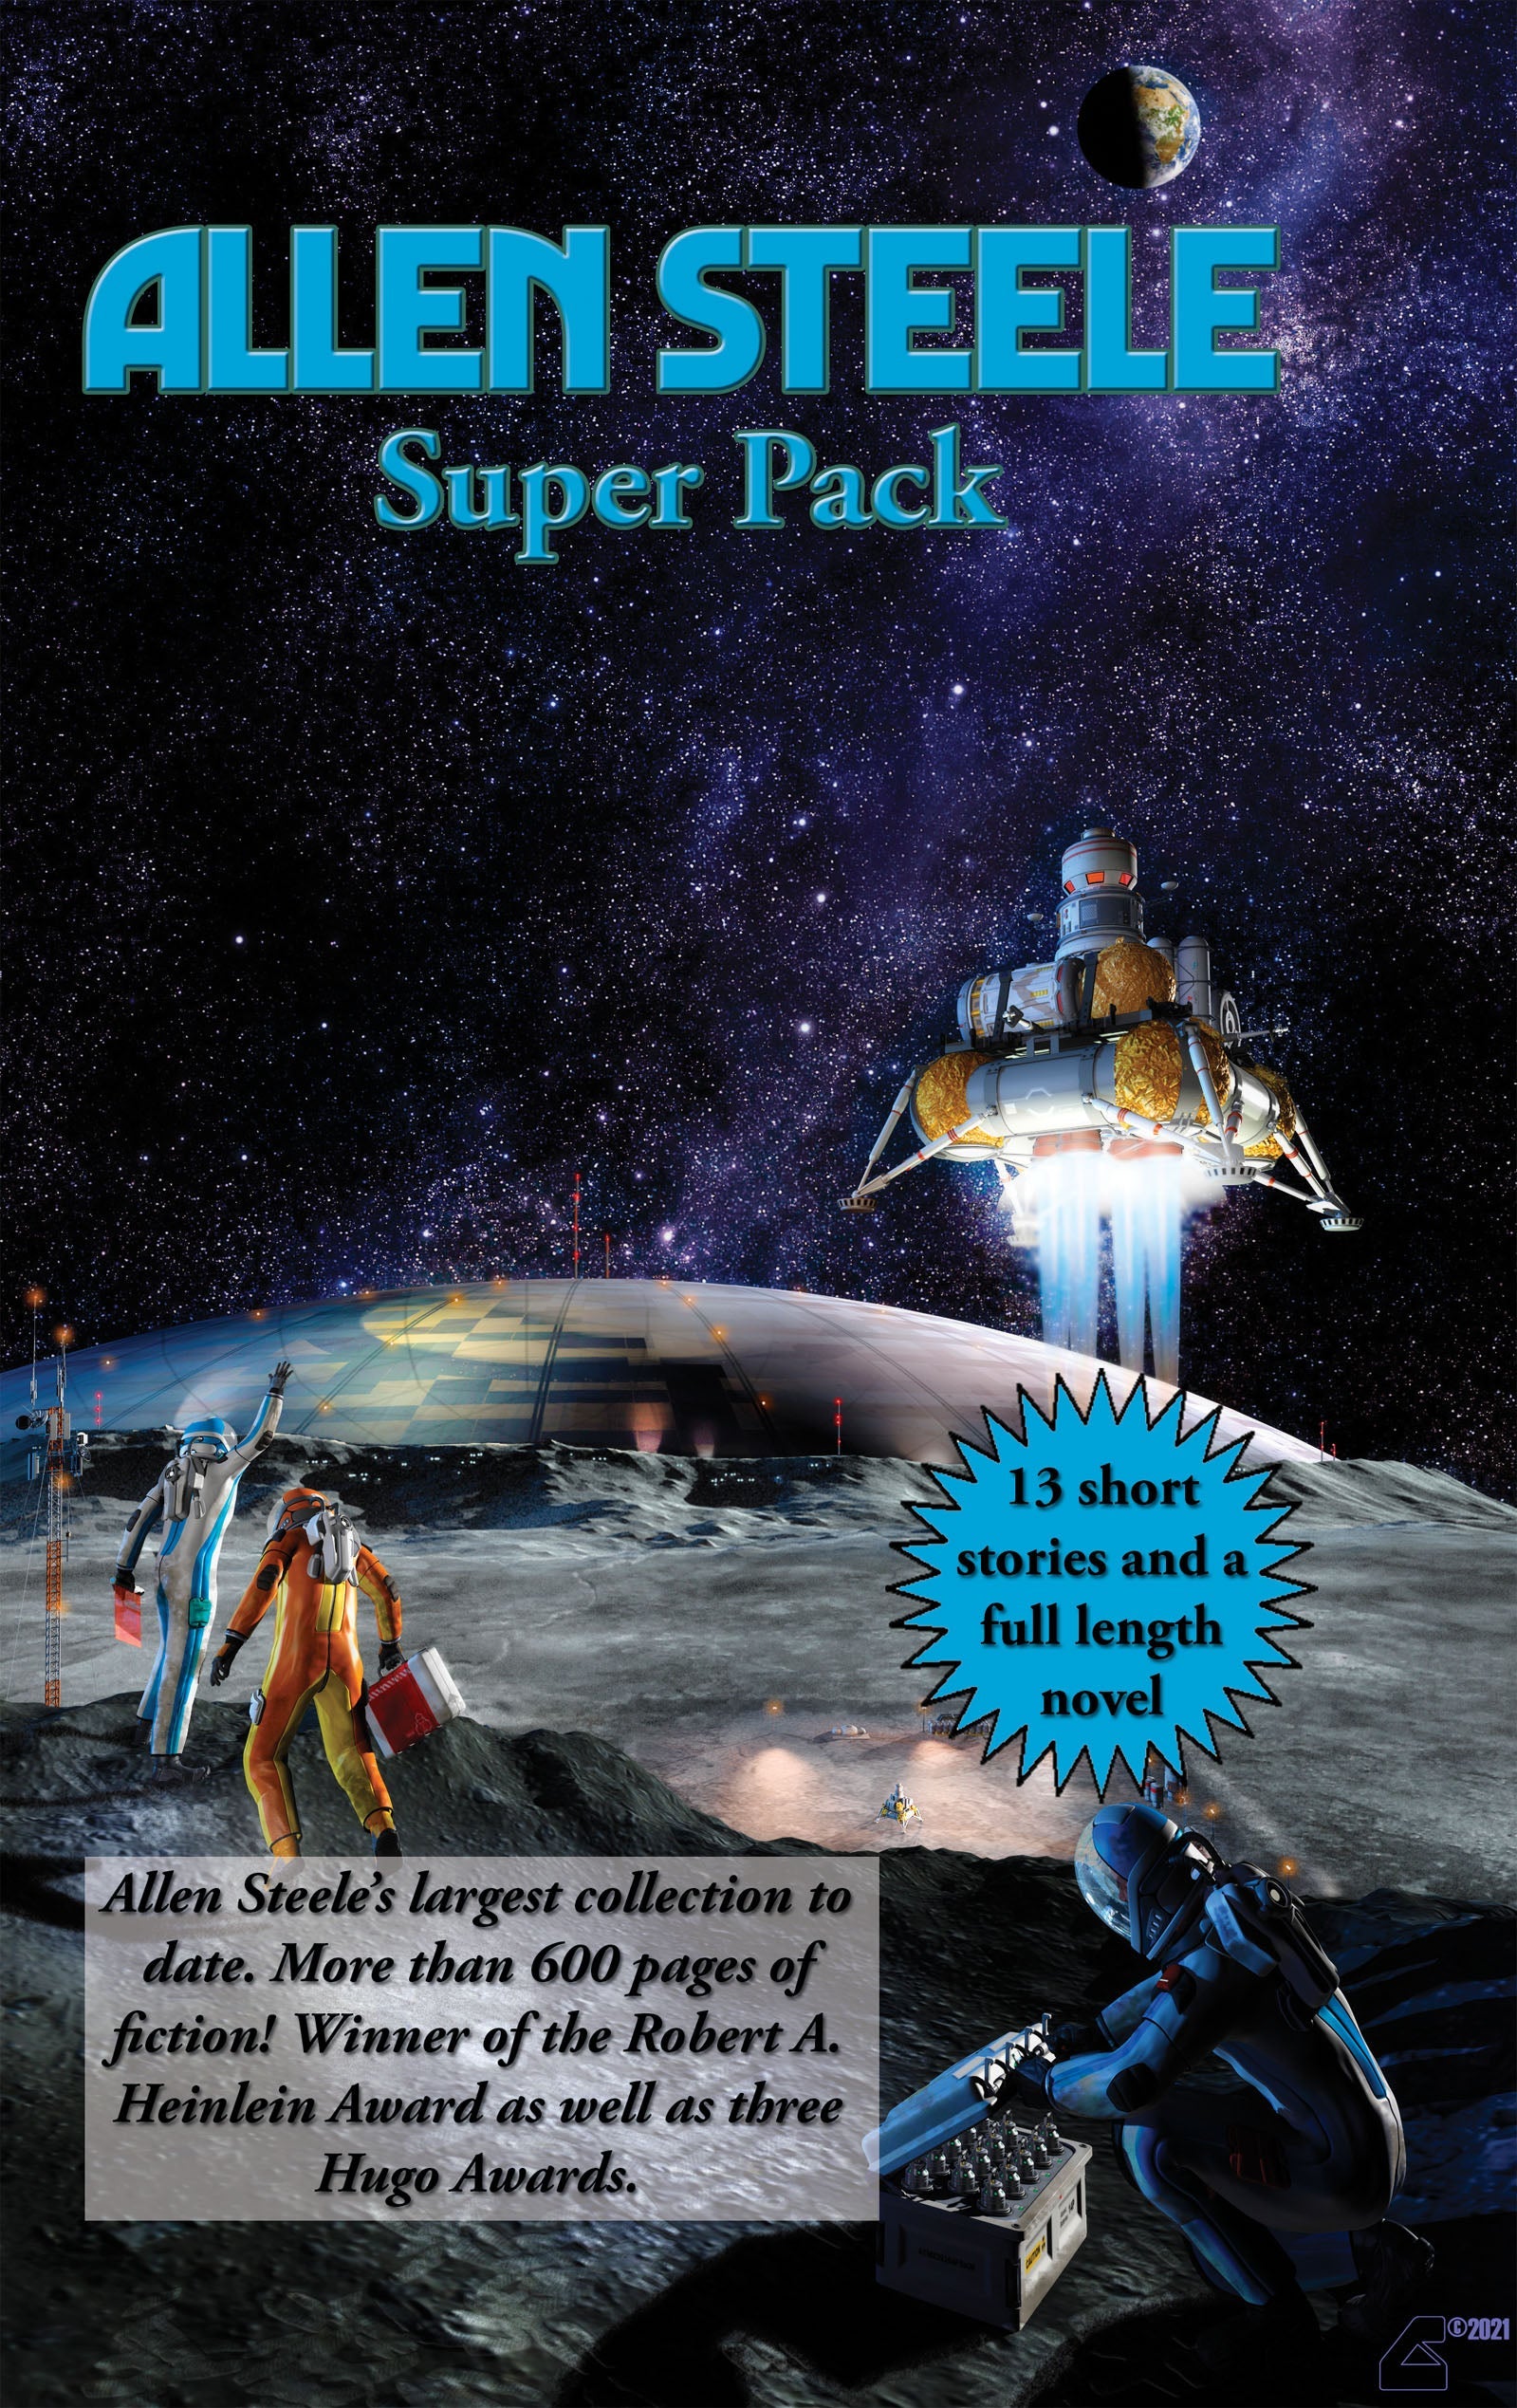 Cover art for Positronic Super Pack #50, the Allen Steele Super Pack.